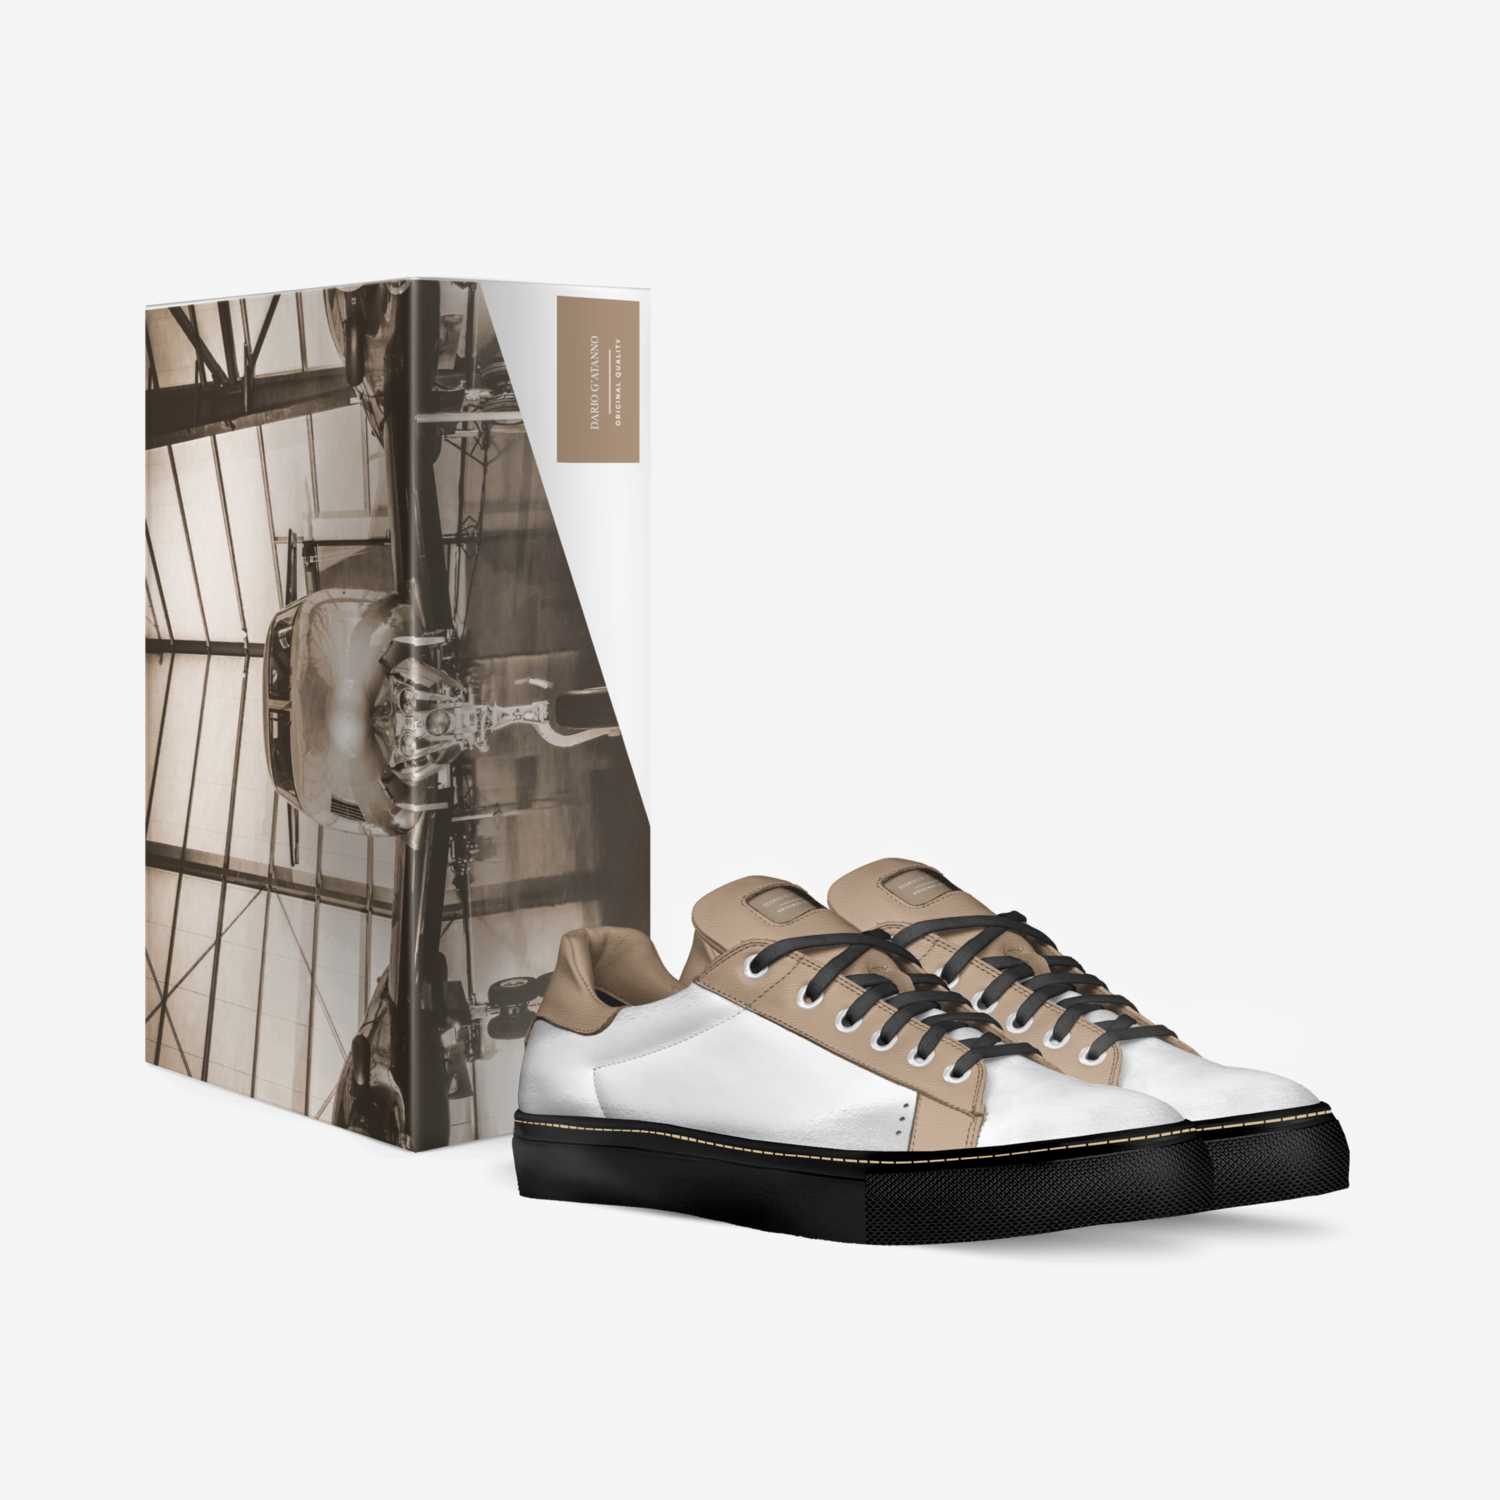 Dario G'Atanno  custom made in Italy shoes by Darel Wesley | Box view